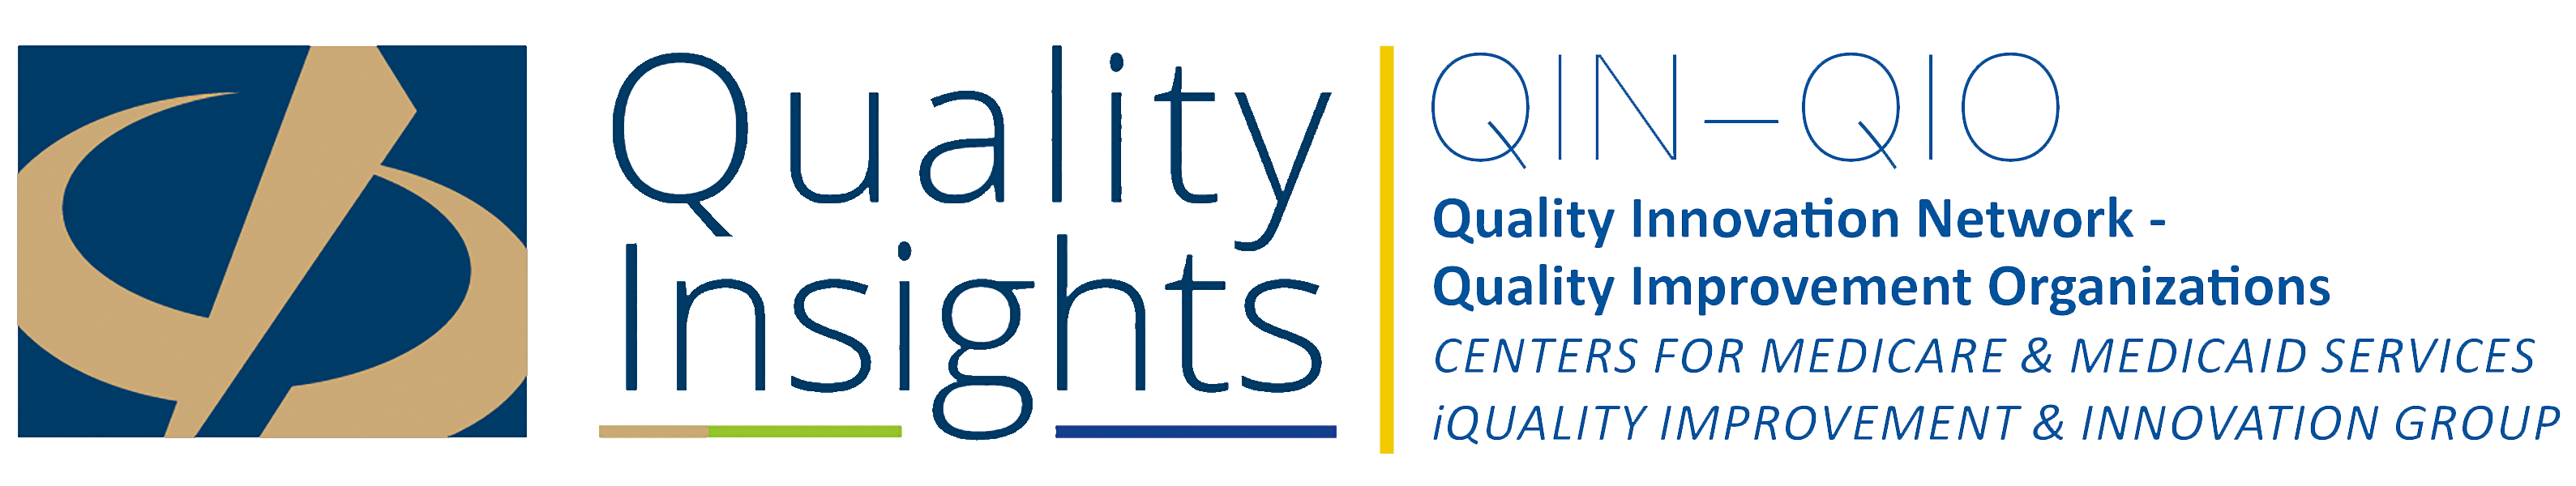 Quality Insights/QIN-QIO Logos